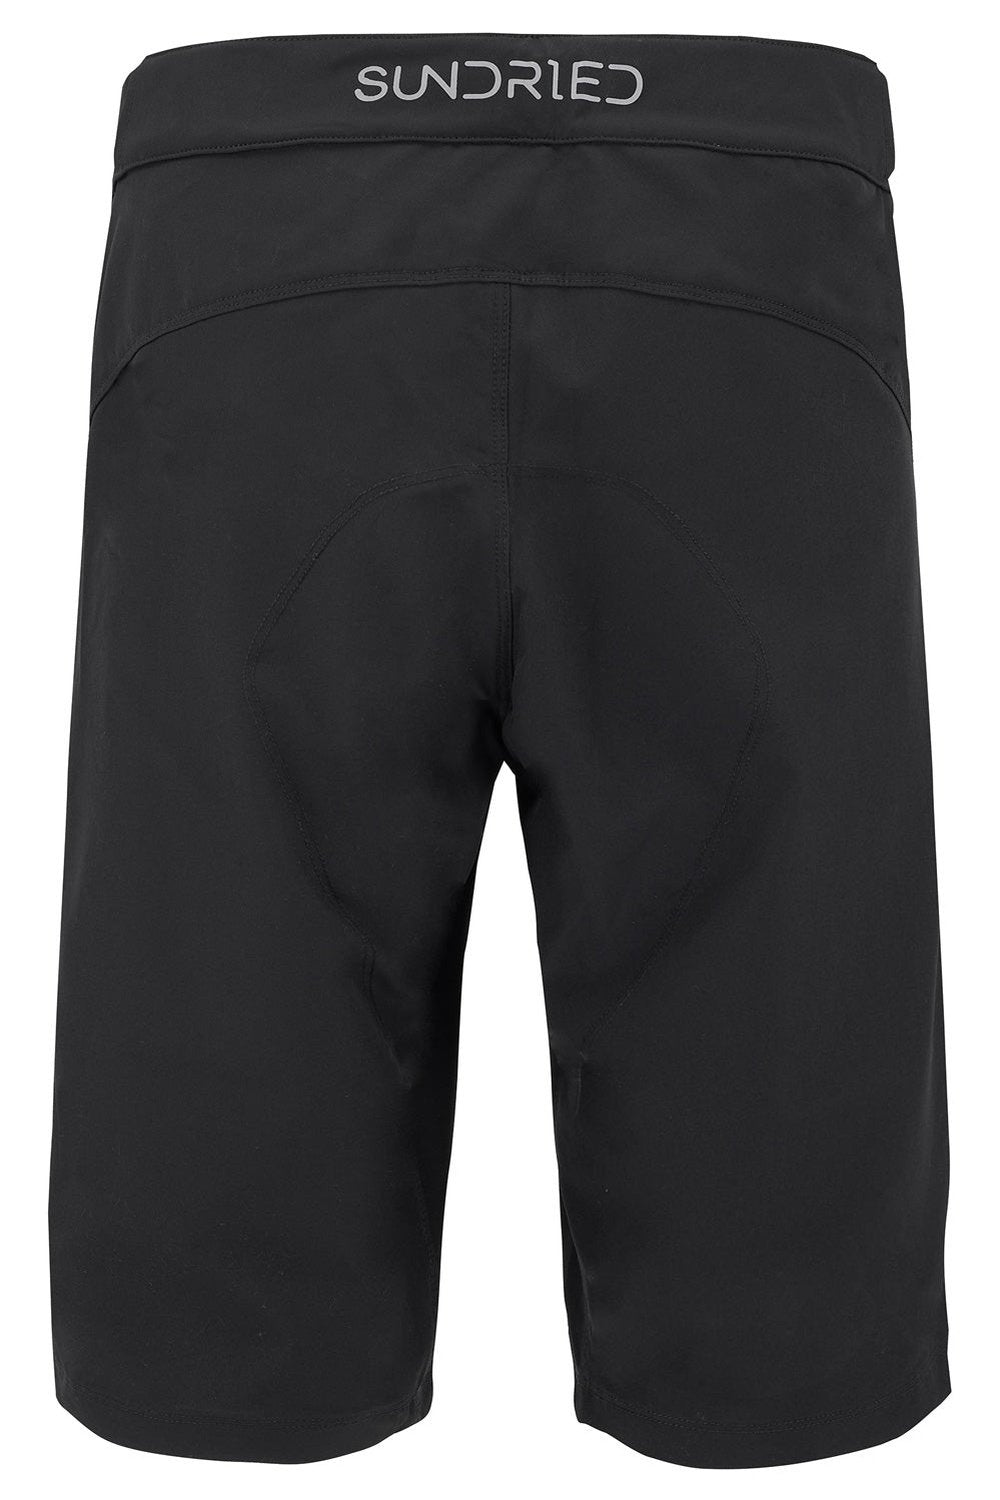 Sundried Huron Men's Mountain Bike Shorts Shorts Activewear